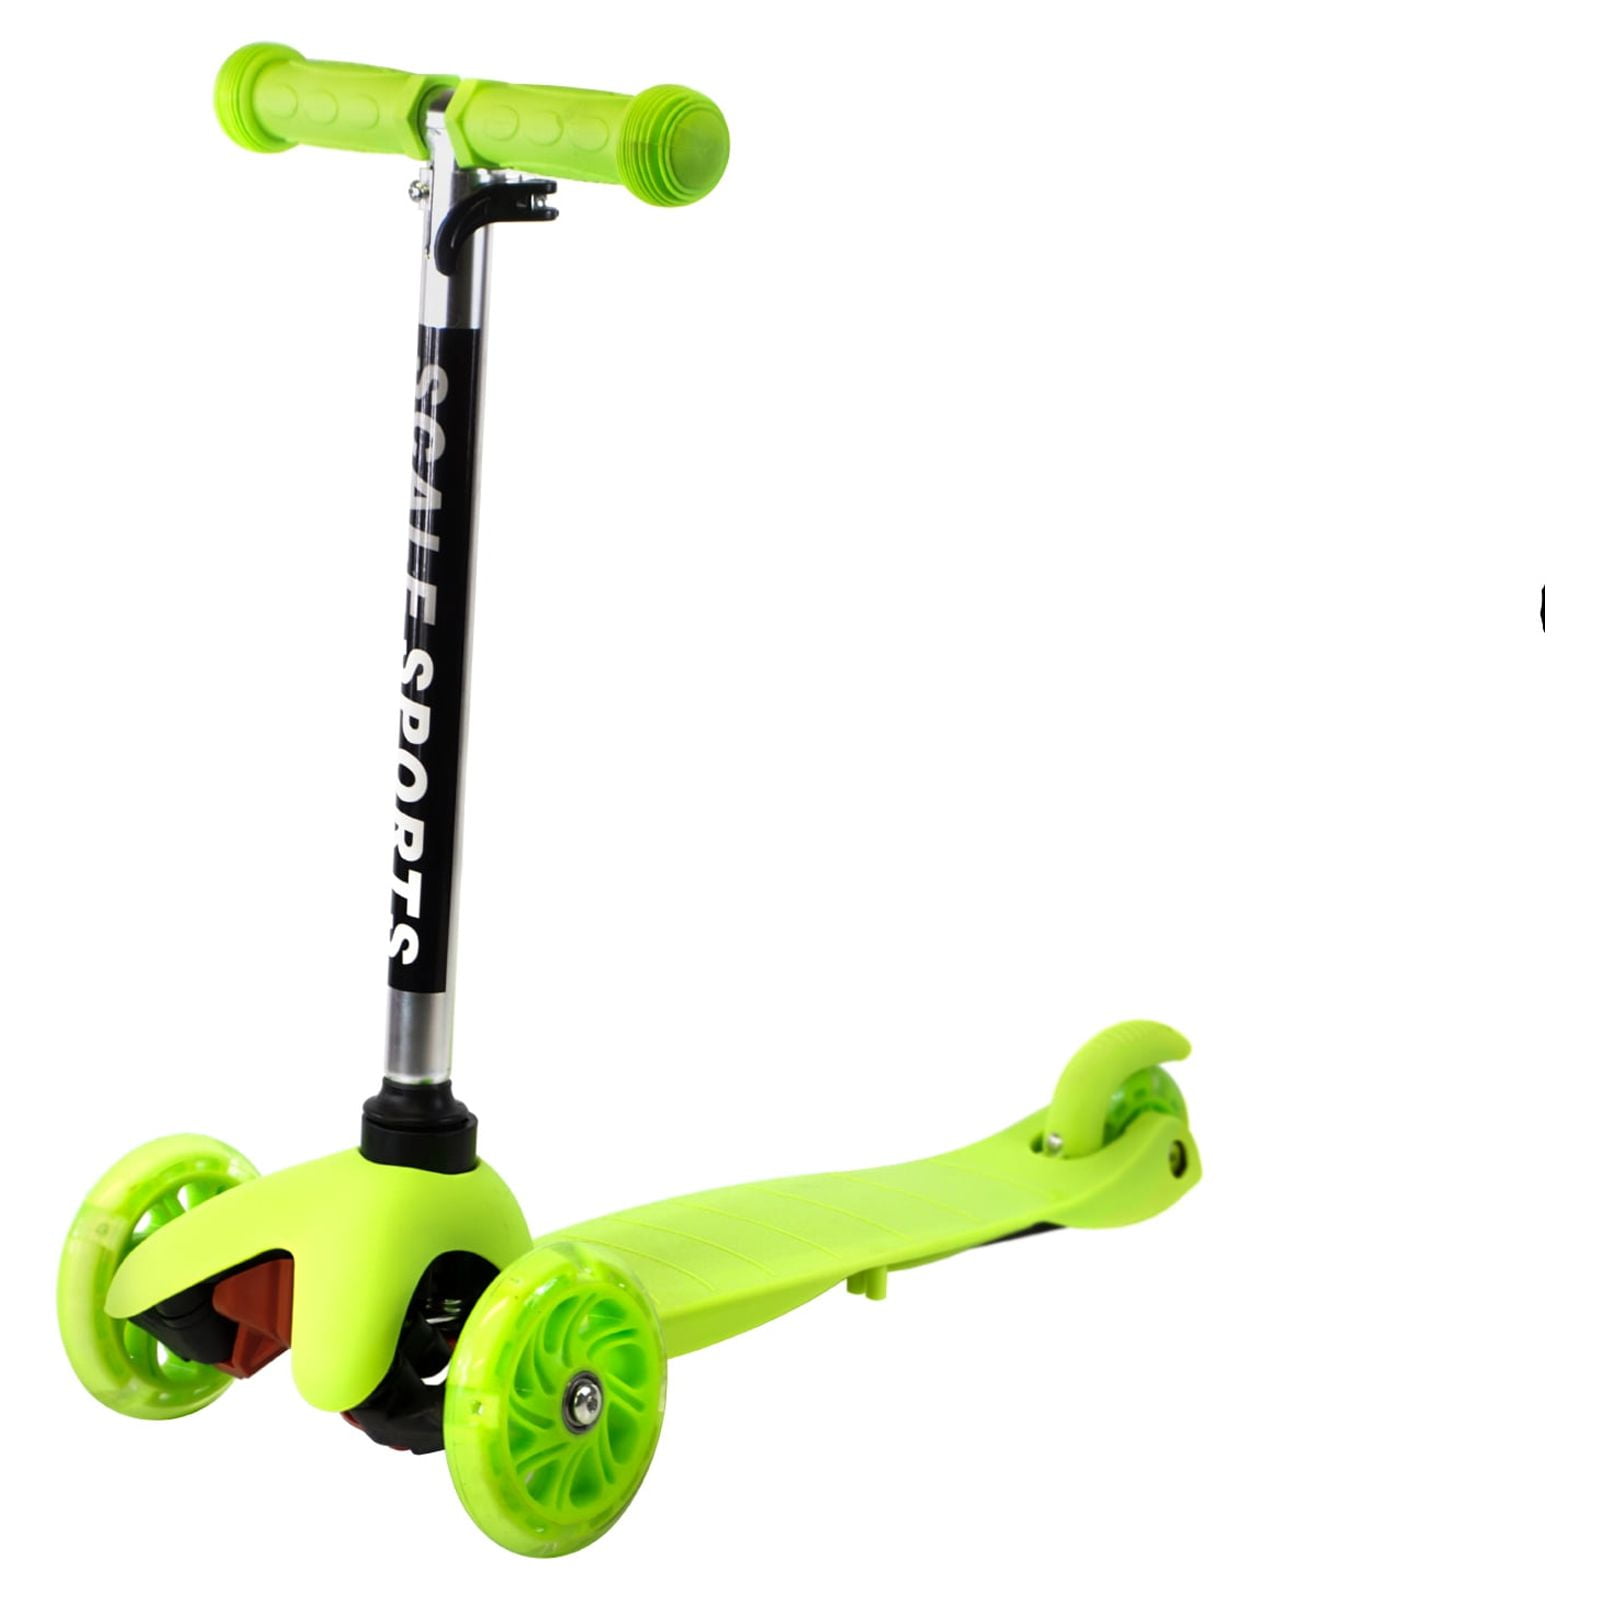 Adjustable Kids Push Kick Scooter with Light Up Wheels Green - Walmart.com